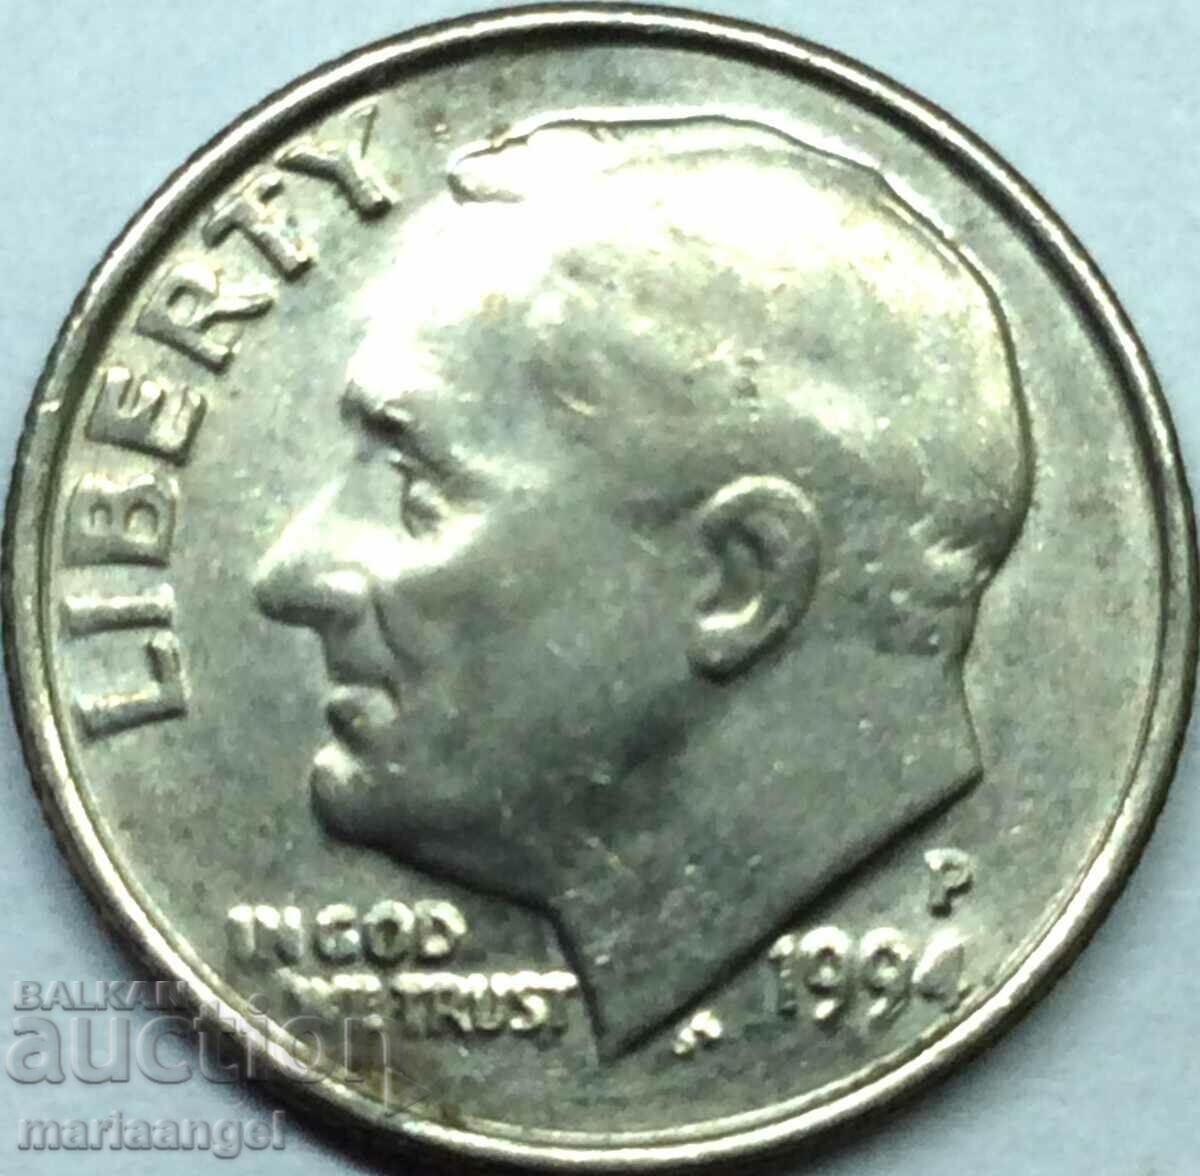 USA 1 dime 1994 10 cents